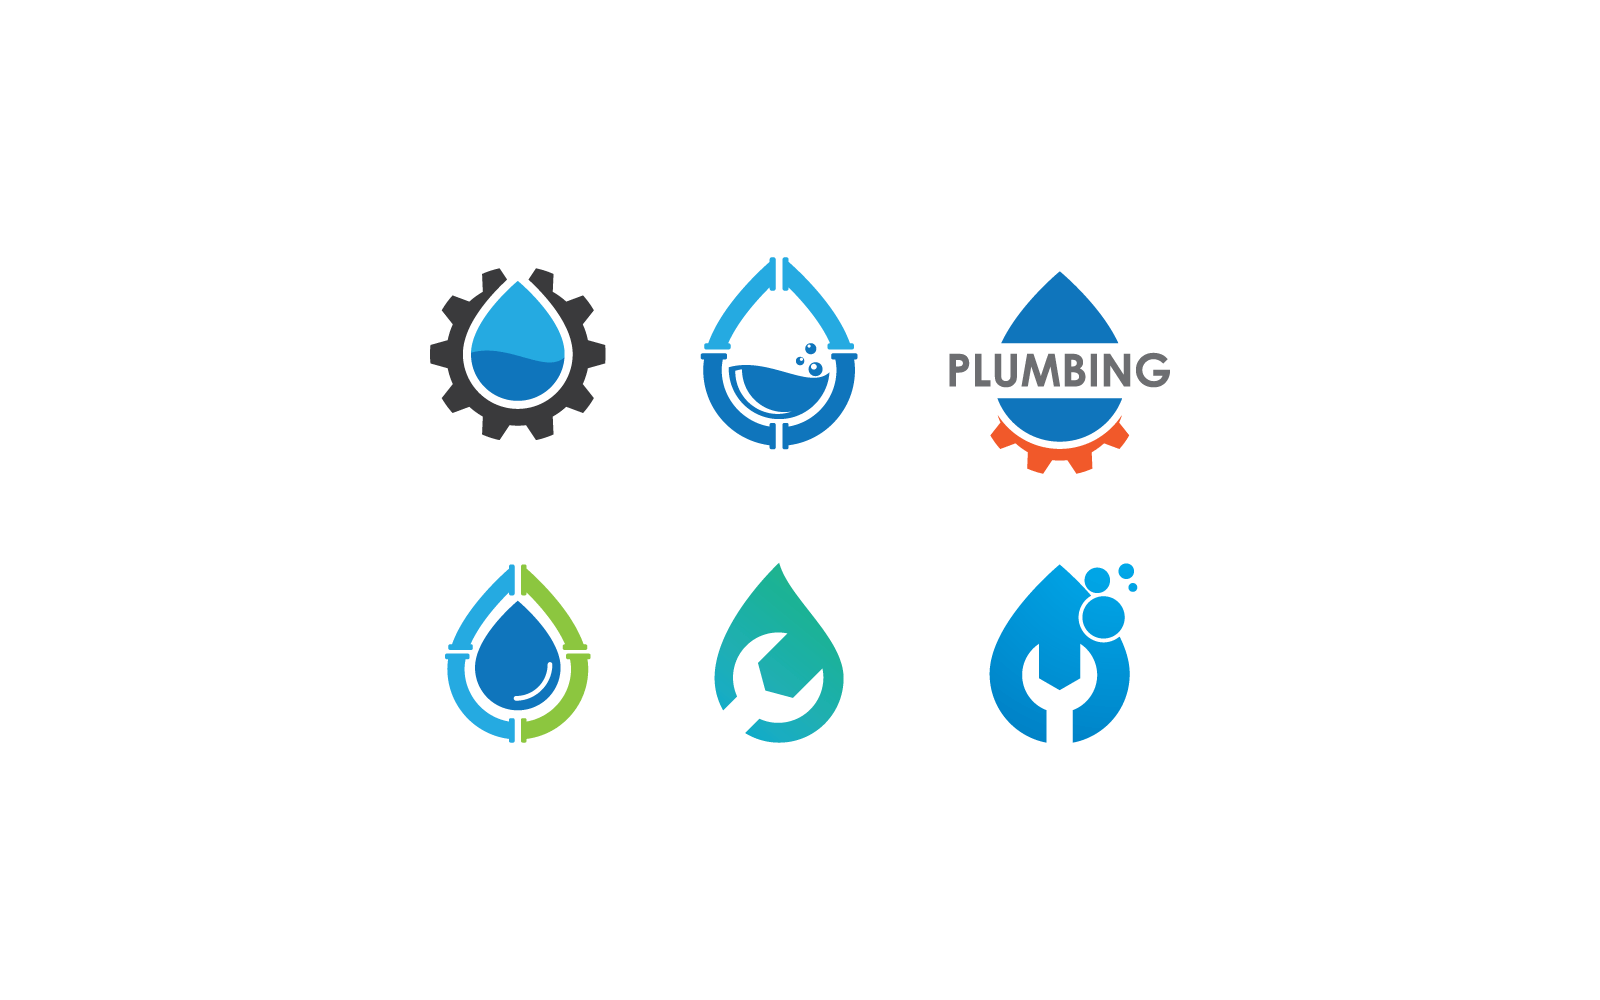 Plumbing logo vector flat design business